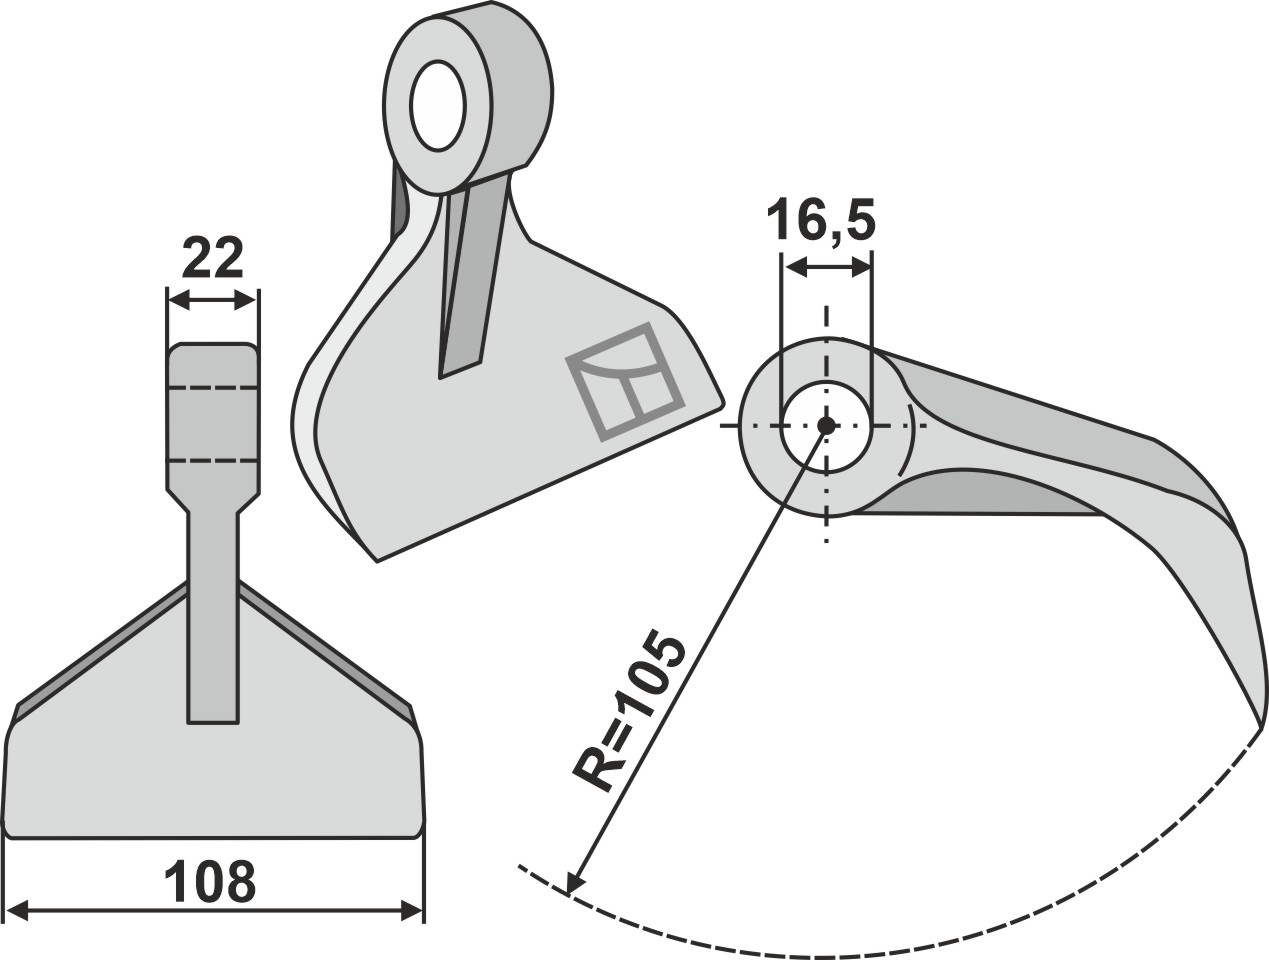 Hammerschlegel geeignet für: Ferri Y-messen, haaks messen, recht messen, hamerklepels 